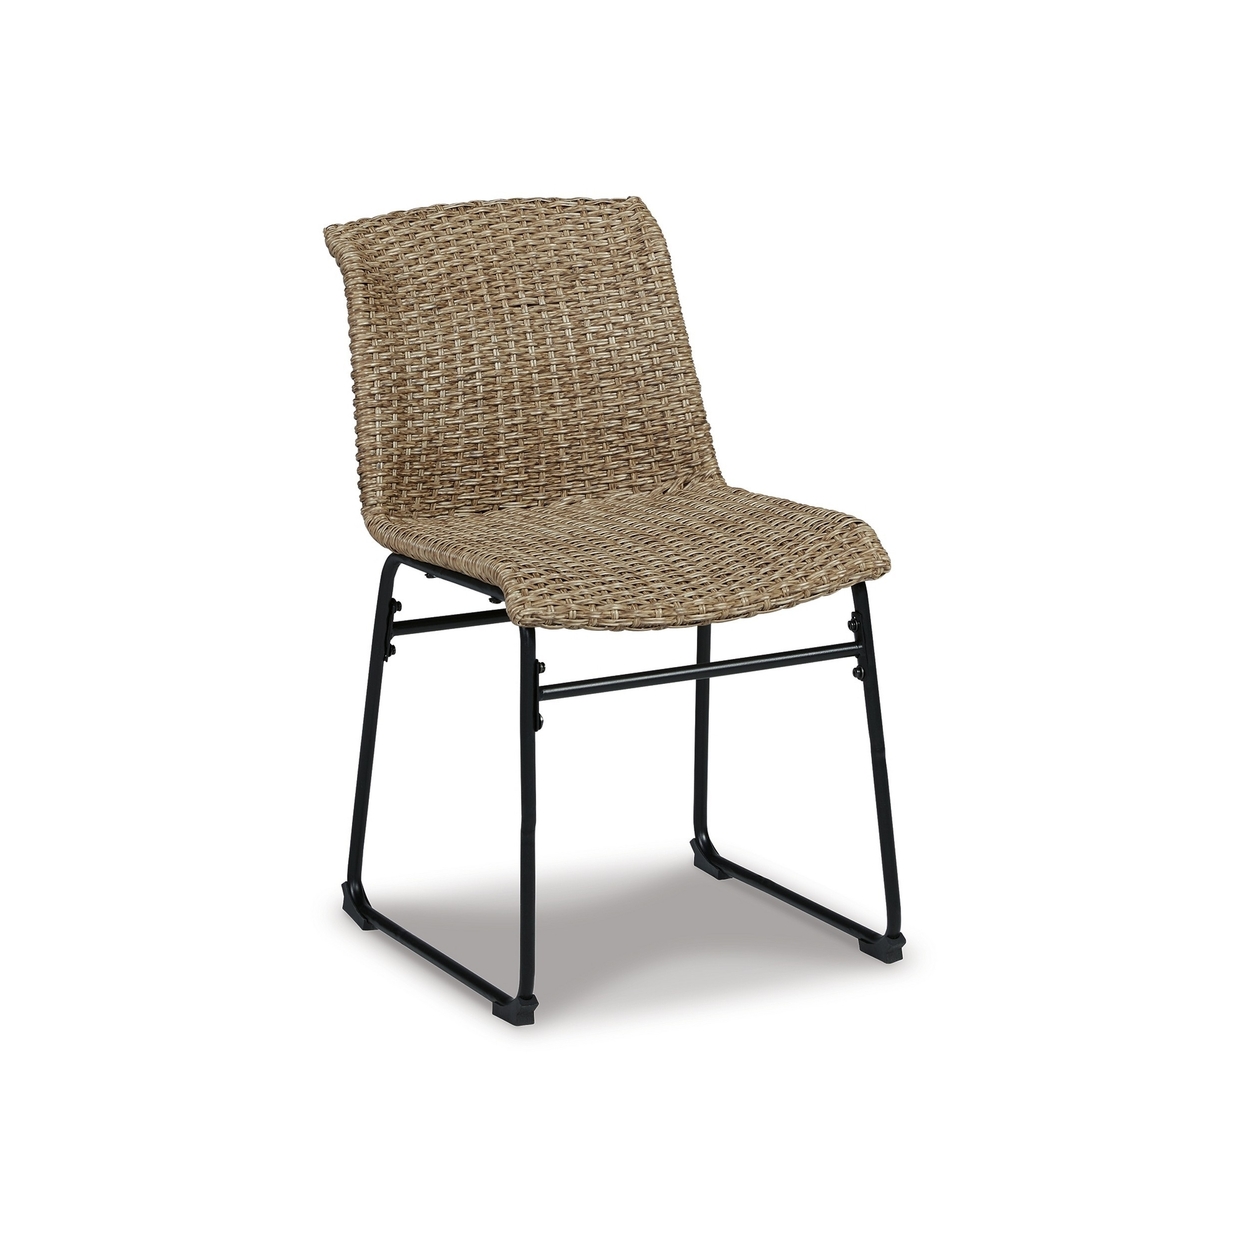 26 Inch Outdoor Dining Chair Set Of 2, Black Steel Frame, Brown Wicker Seat - Saltoro Sherpi